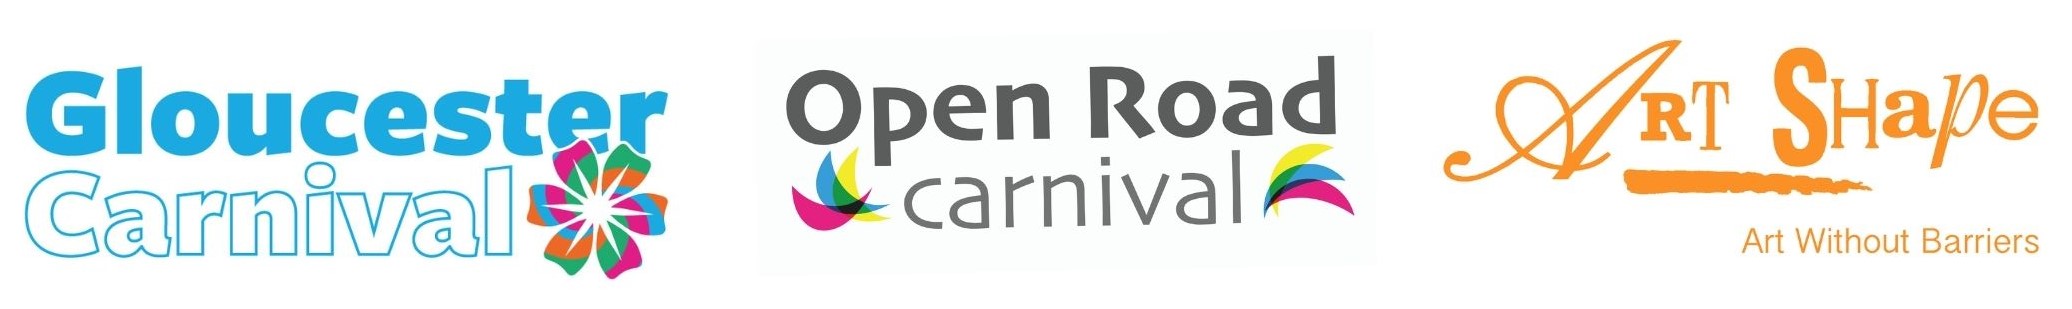 Gloucester Carnival, Open Road Carnival and Art Shape Logos